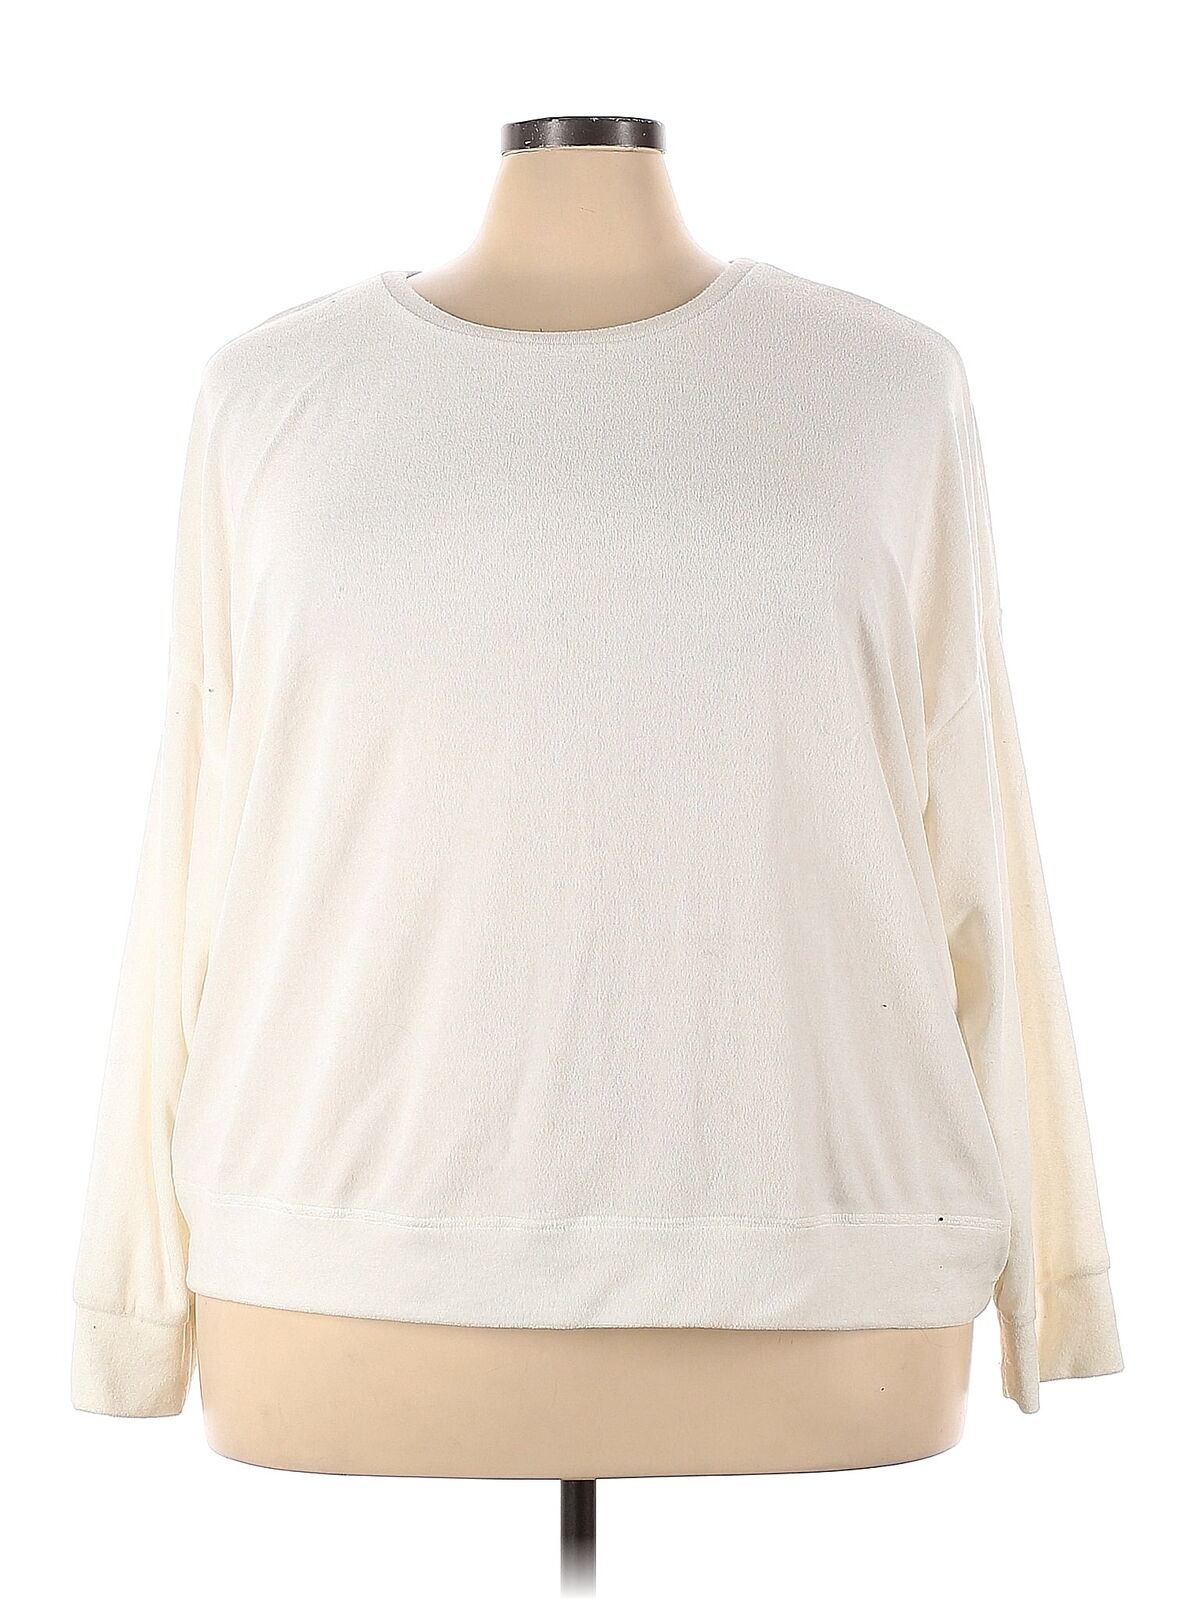 Torrid Women Ivory Sweatshirt 3X Plus - image 1